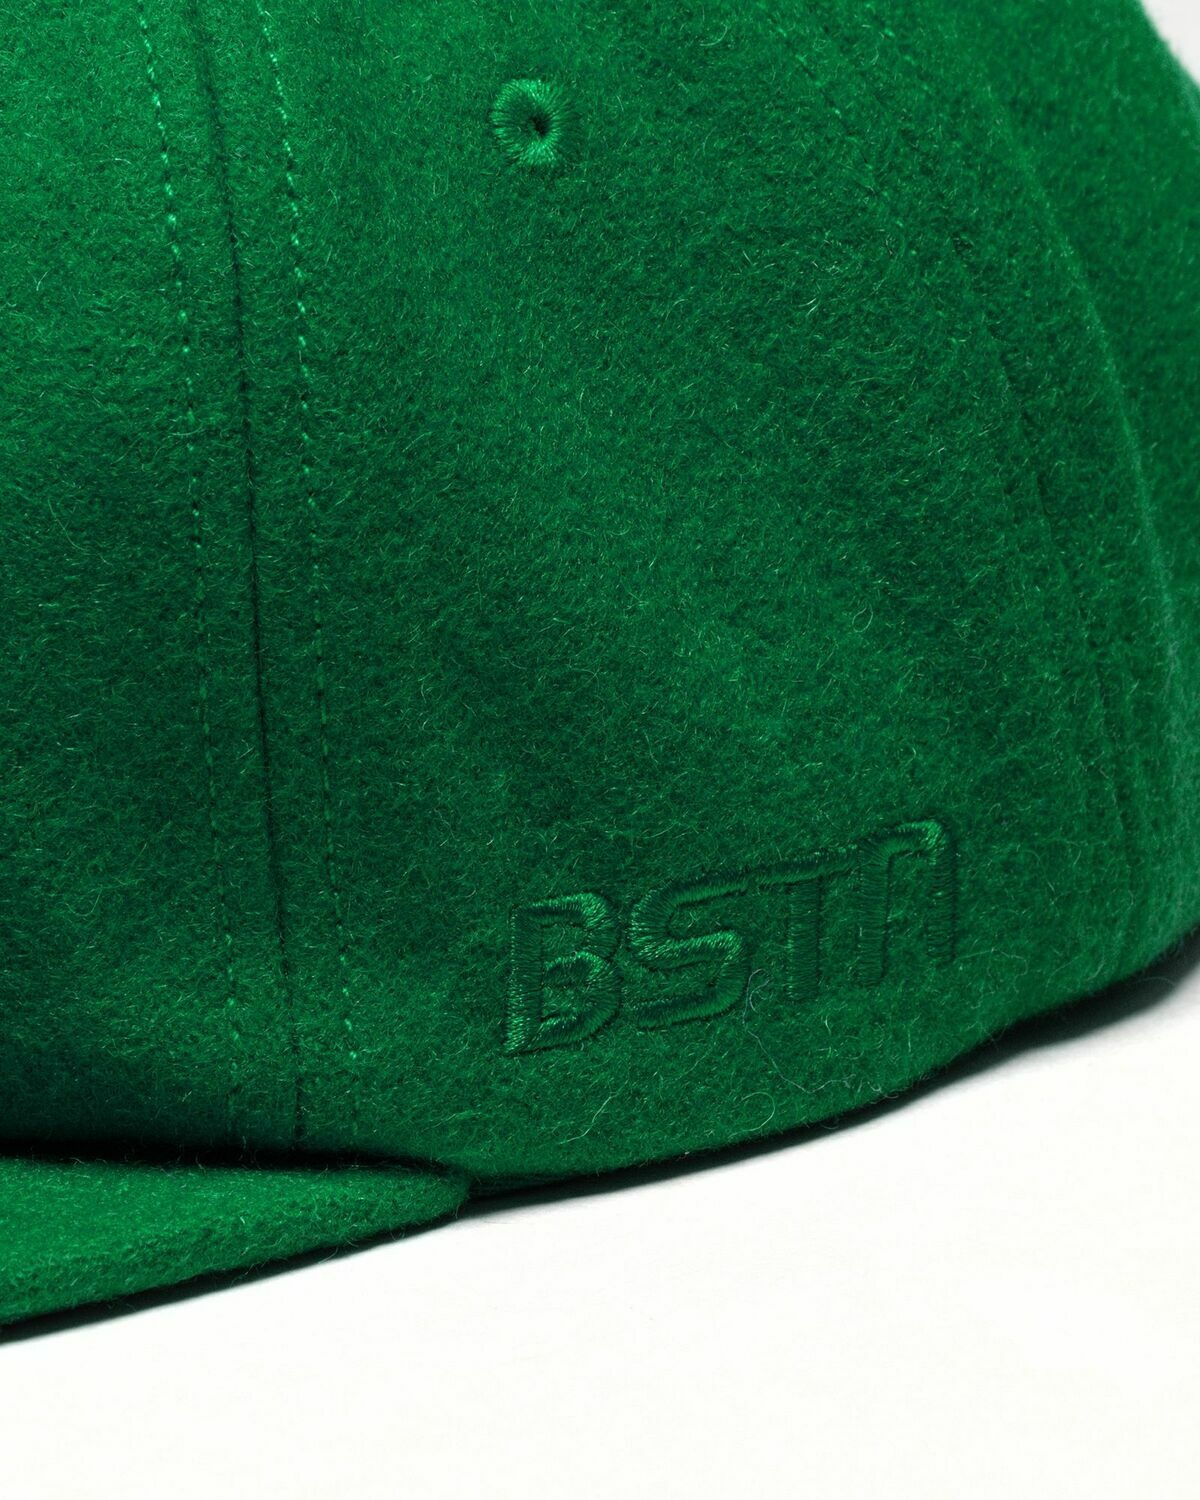 Bstn Brand Logo Wool Cap Green - Mens - Caps